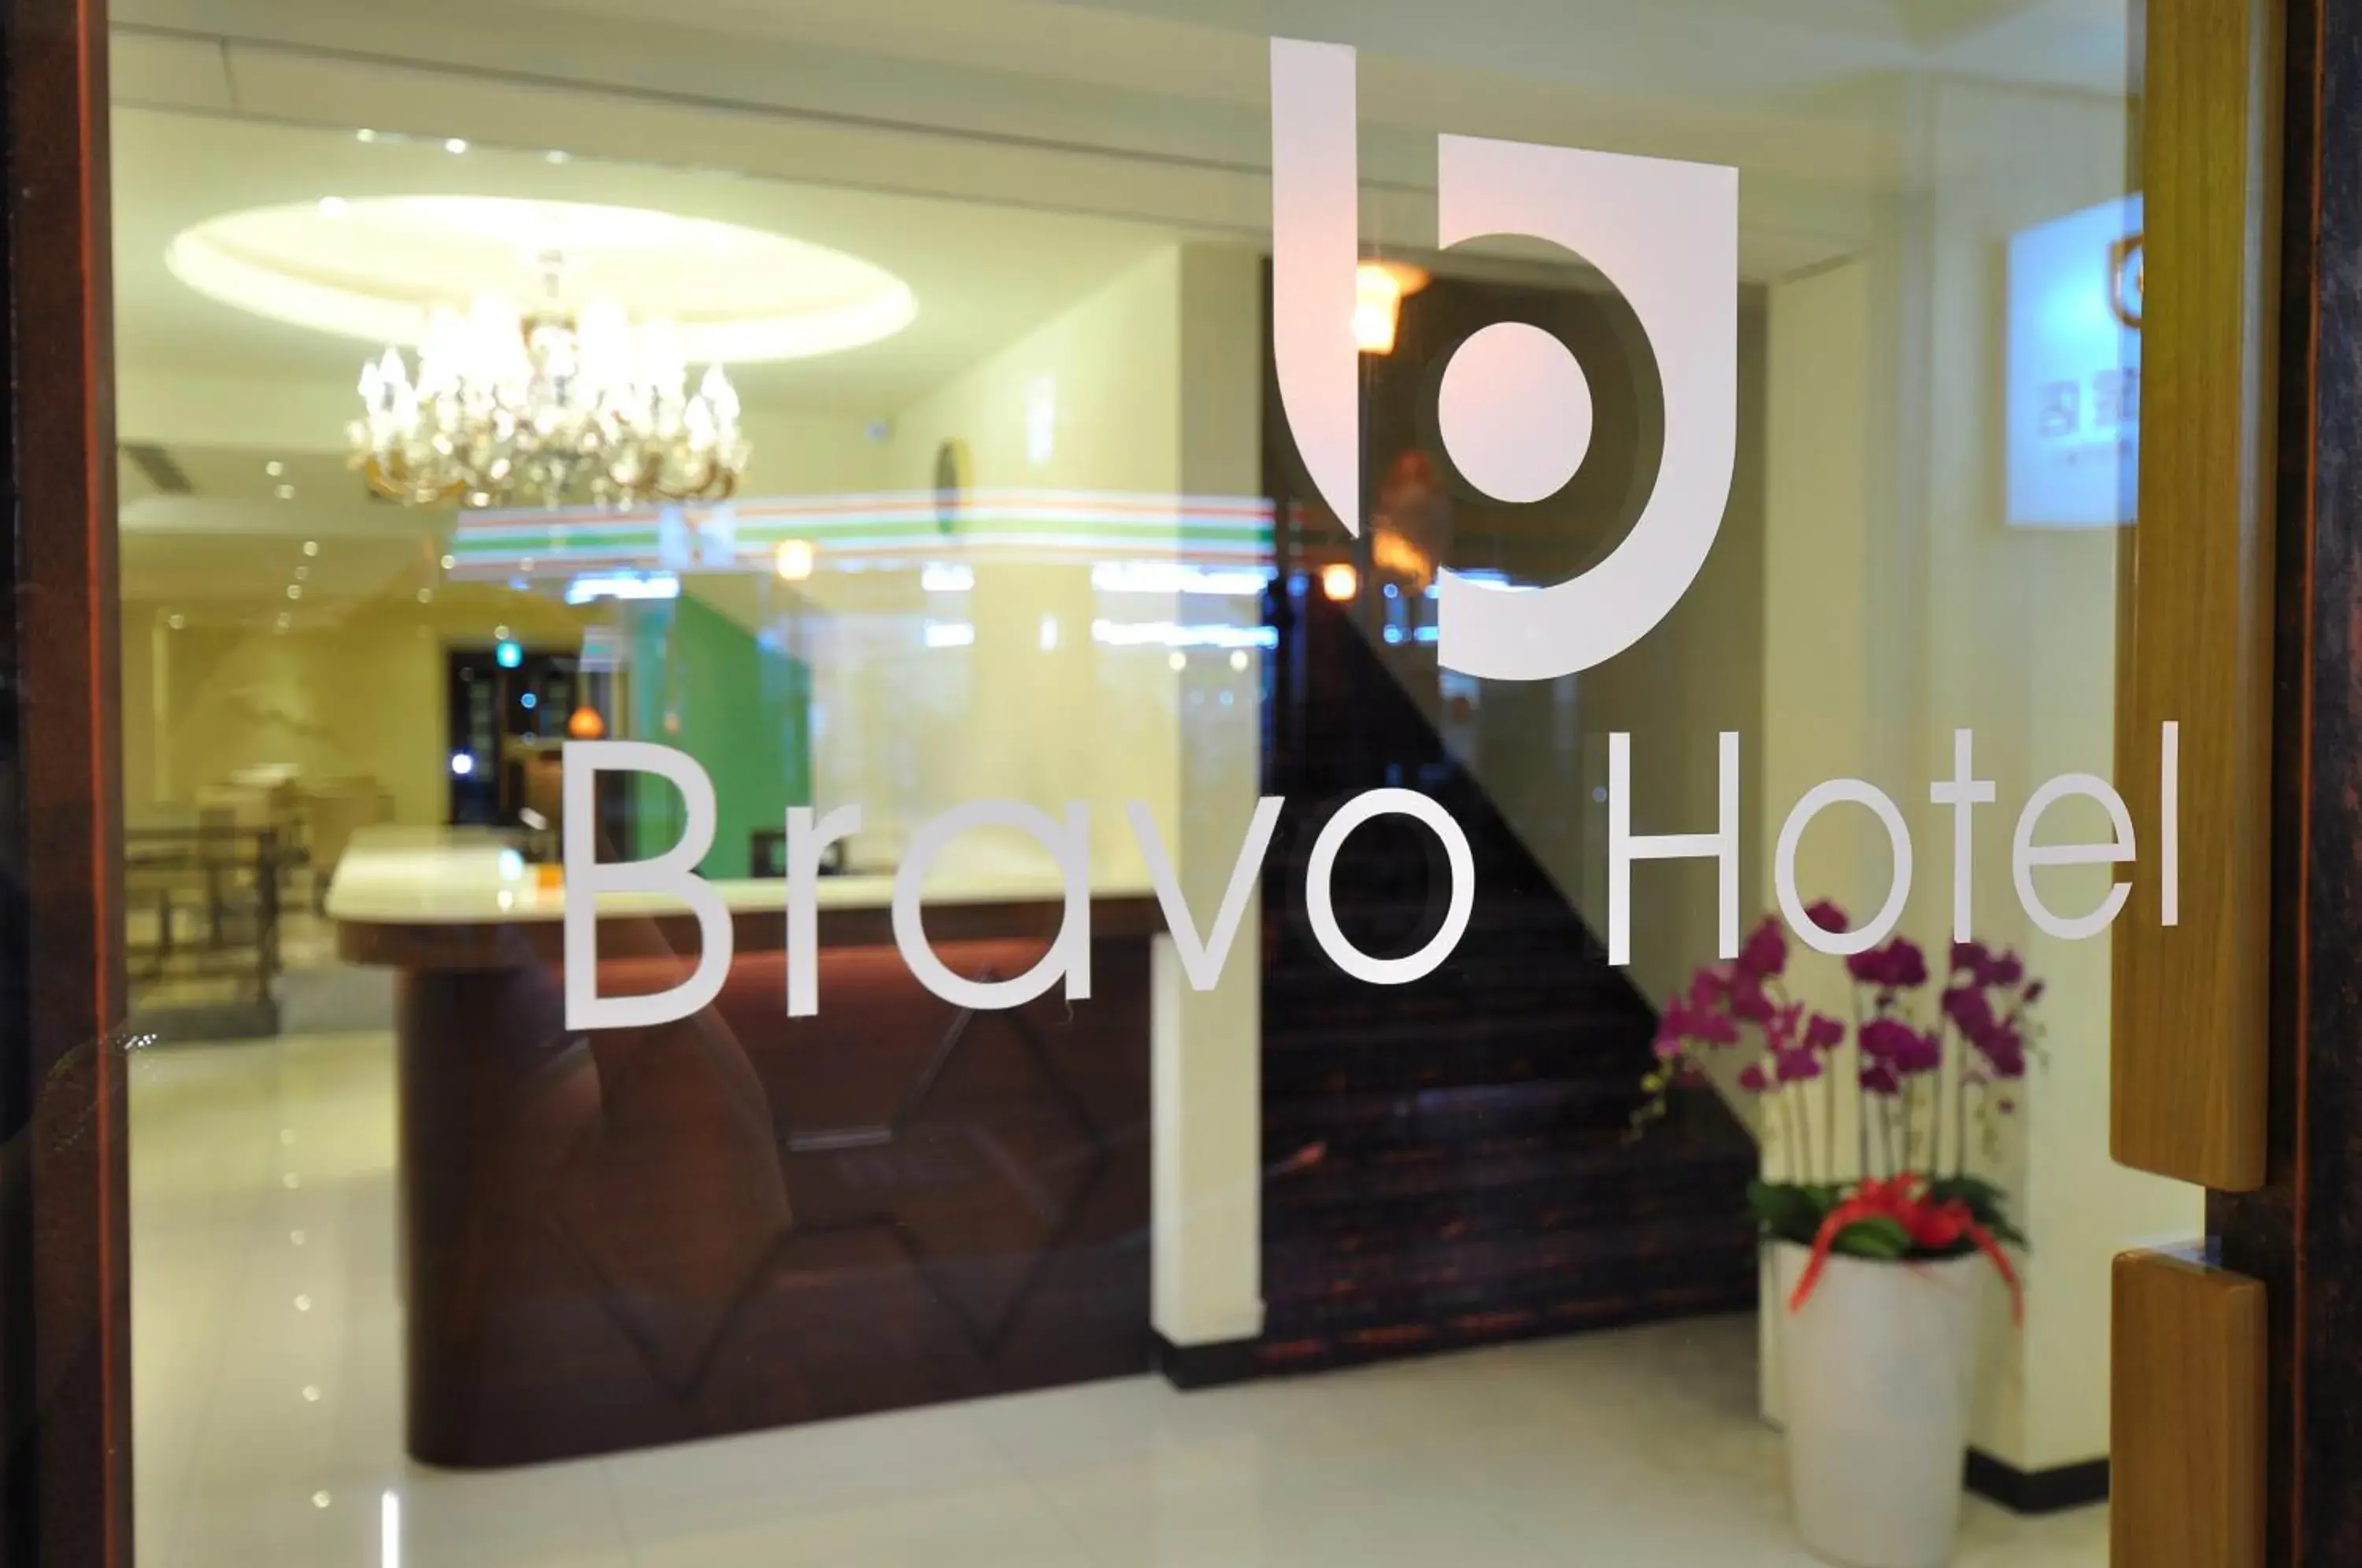 Decorative detail in Bravo Hotel